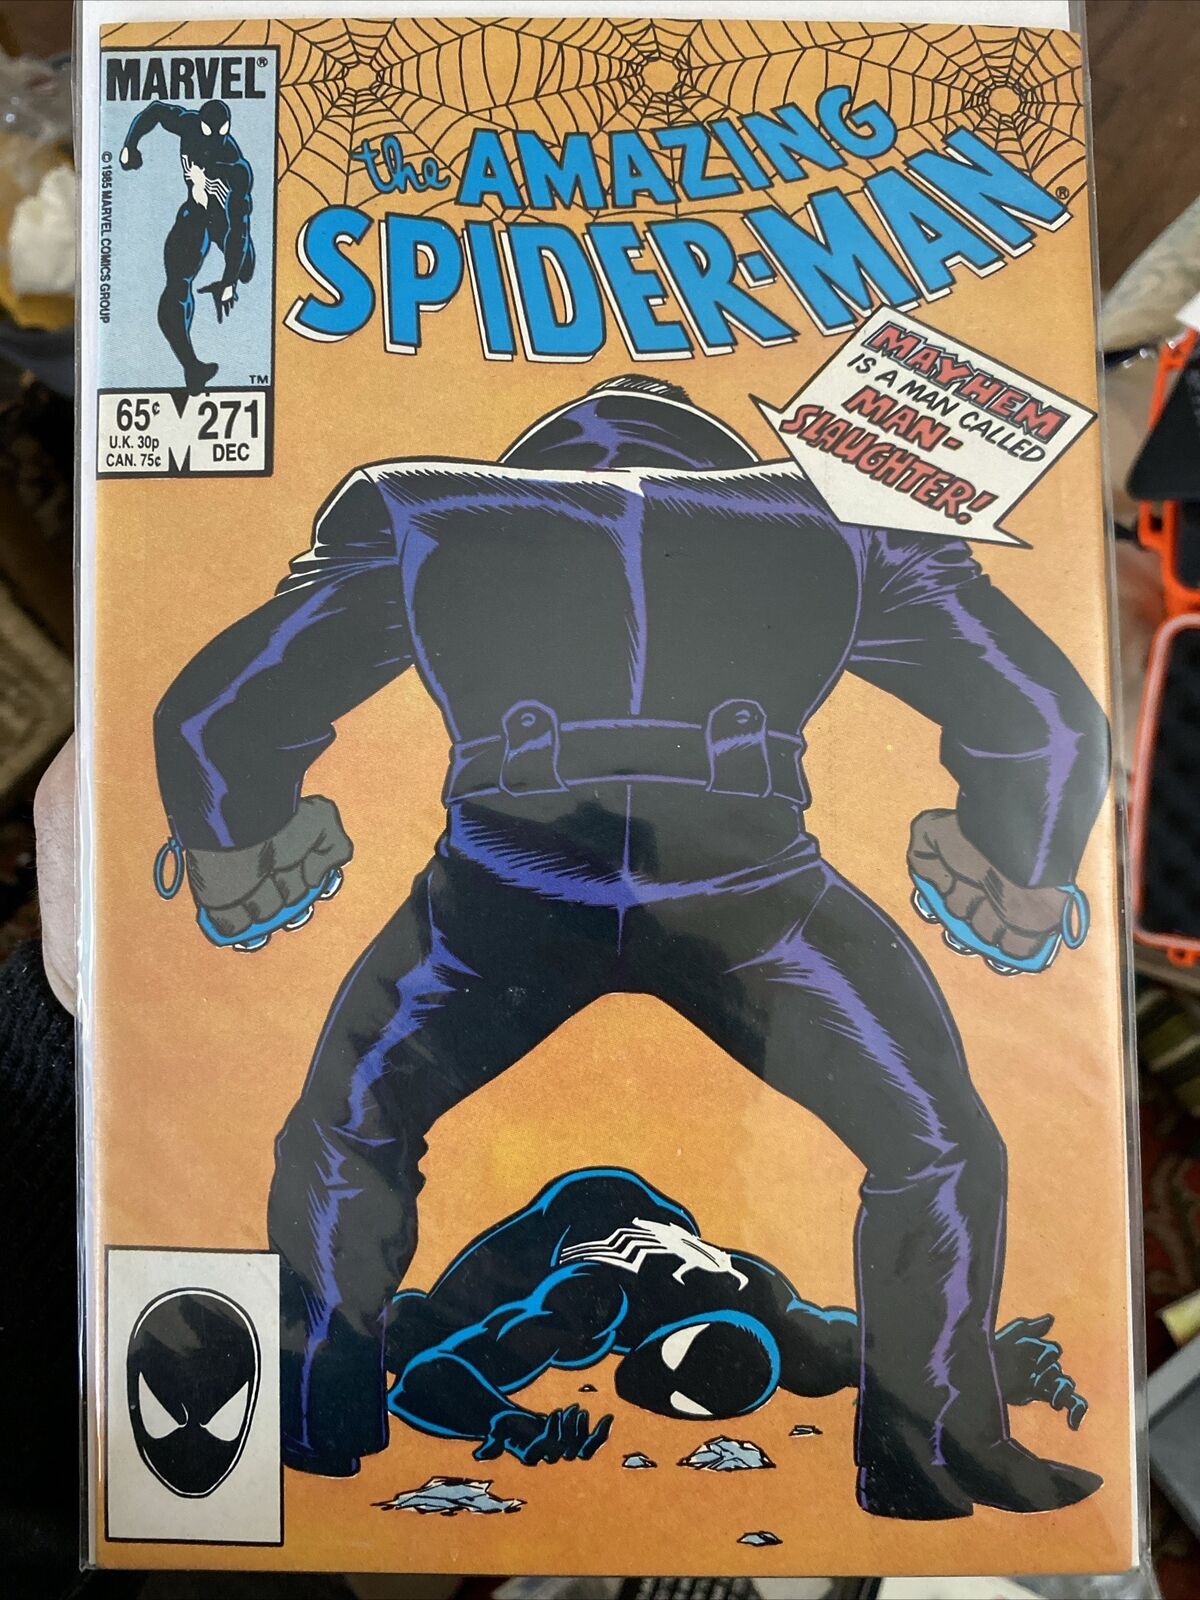 The Amazing Spider-Man #271 - Dec 1985 - Vol.1 - Direct - Minor Key - (726A)